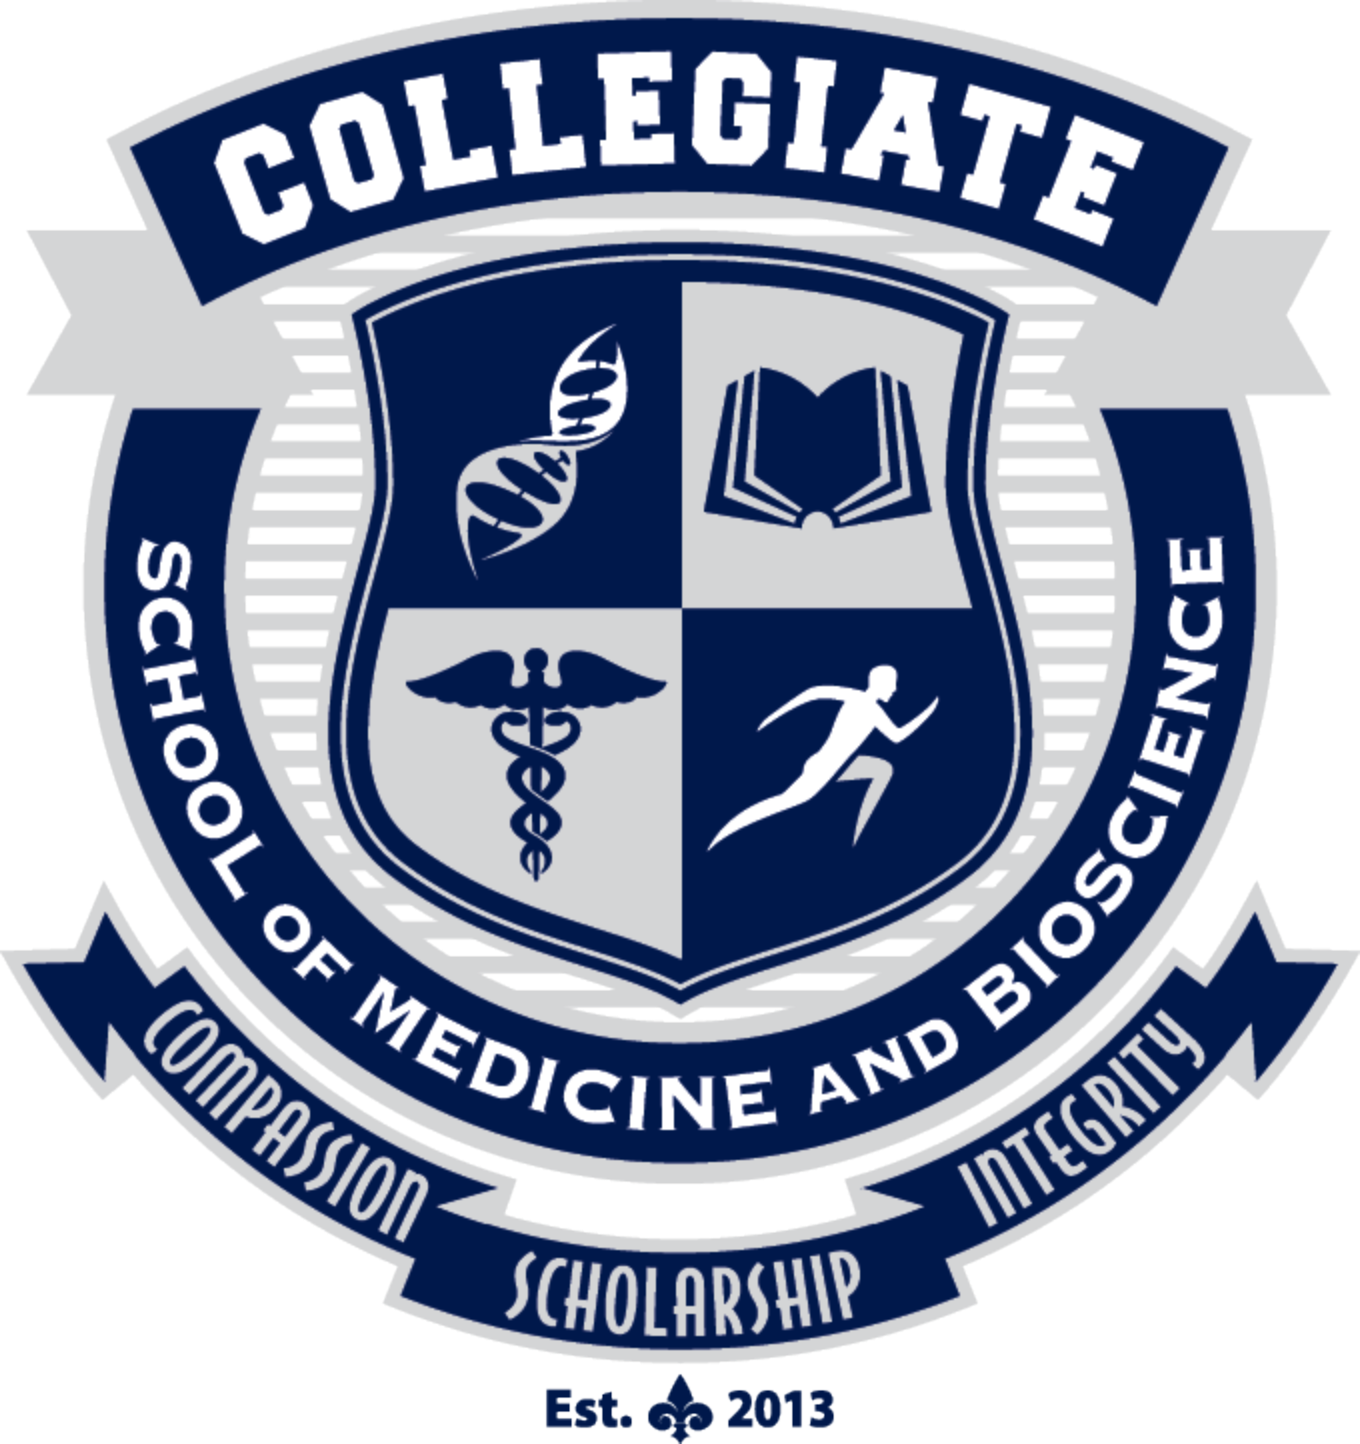 Collegiate School of Medicine and Bioscience